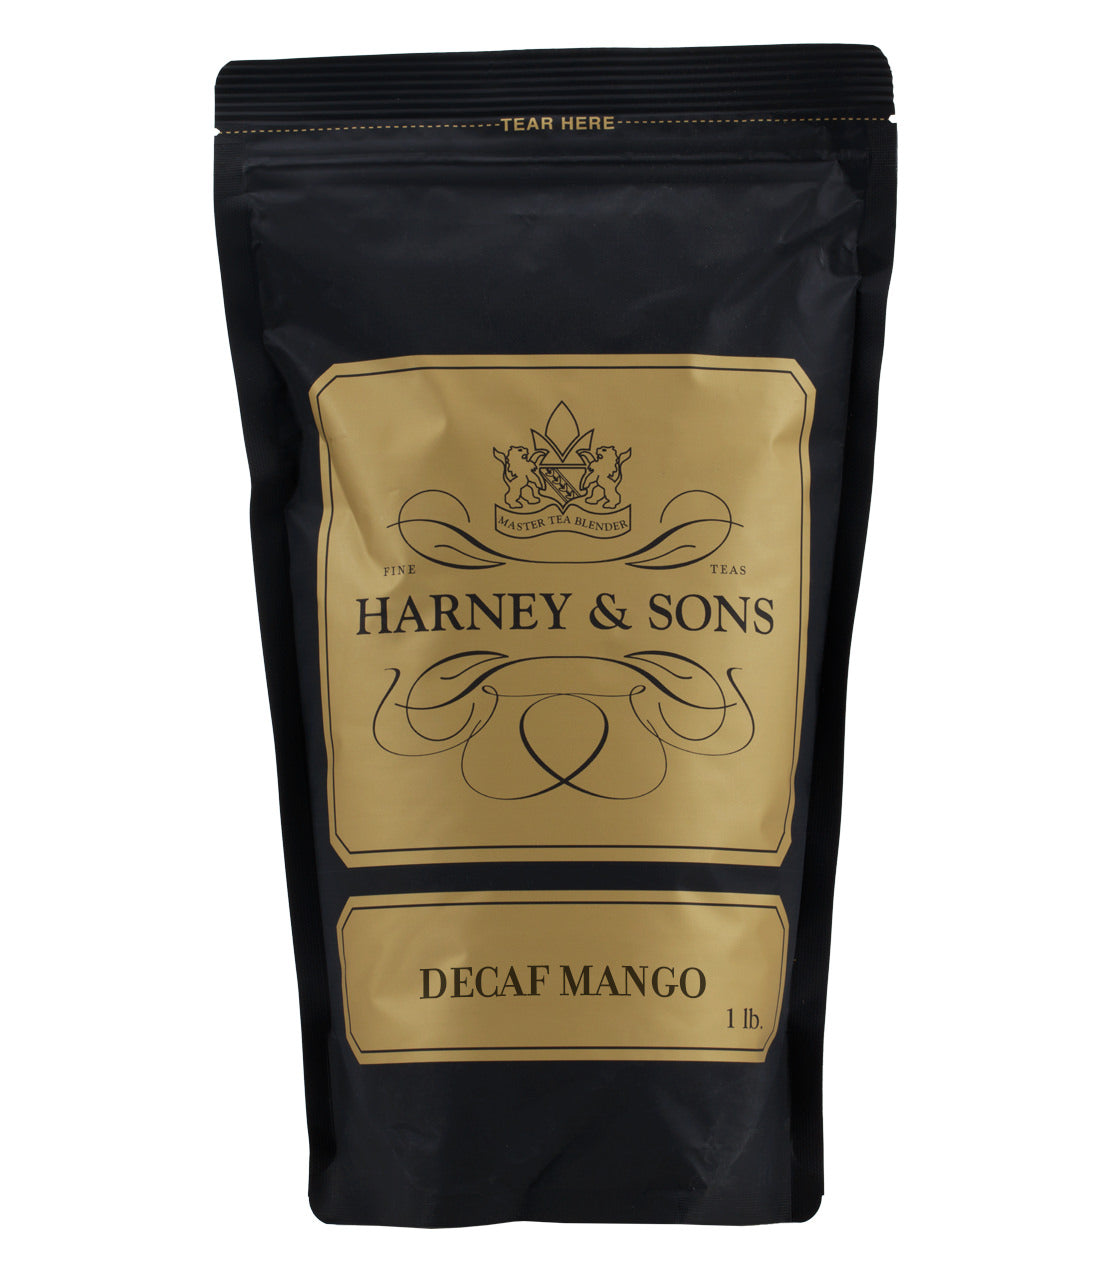 Decaf Mango - Loose 1 lb. Bag - Harney & Sons Fine Teas